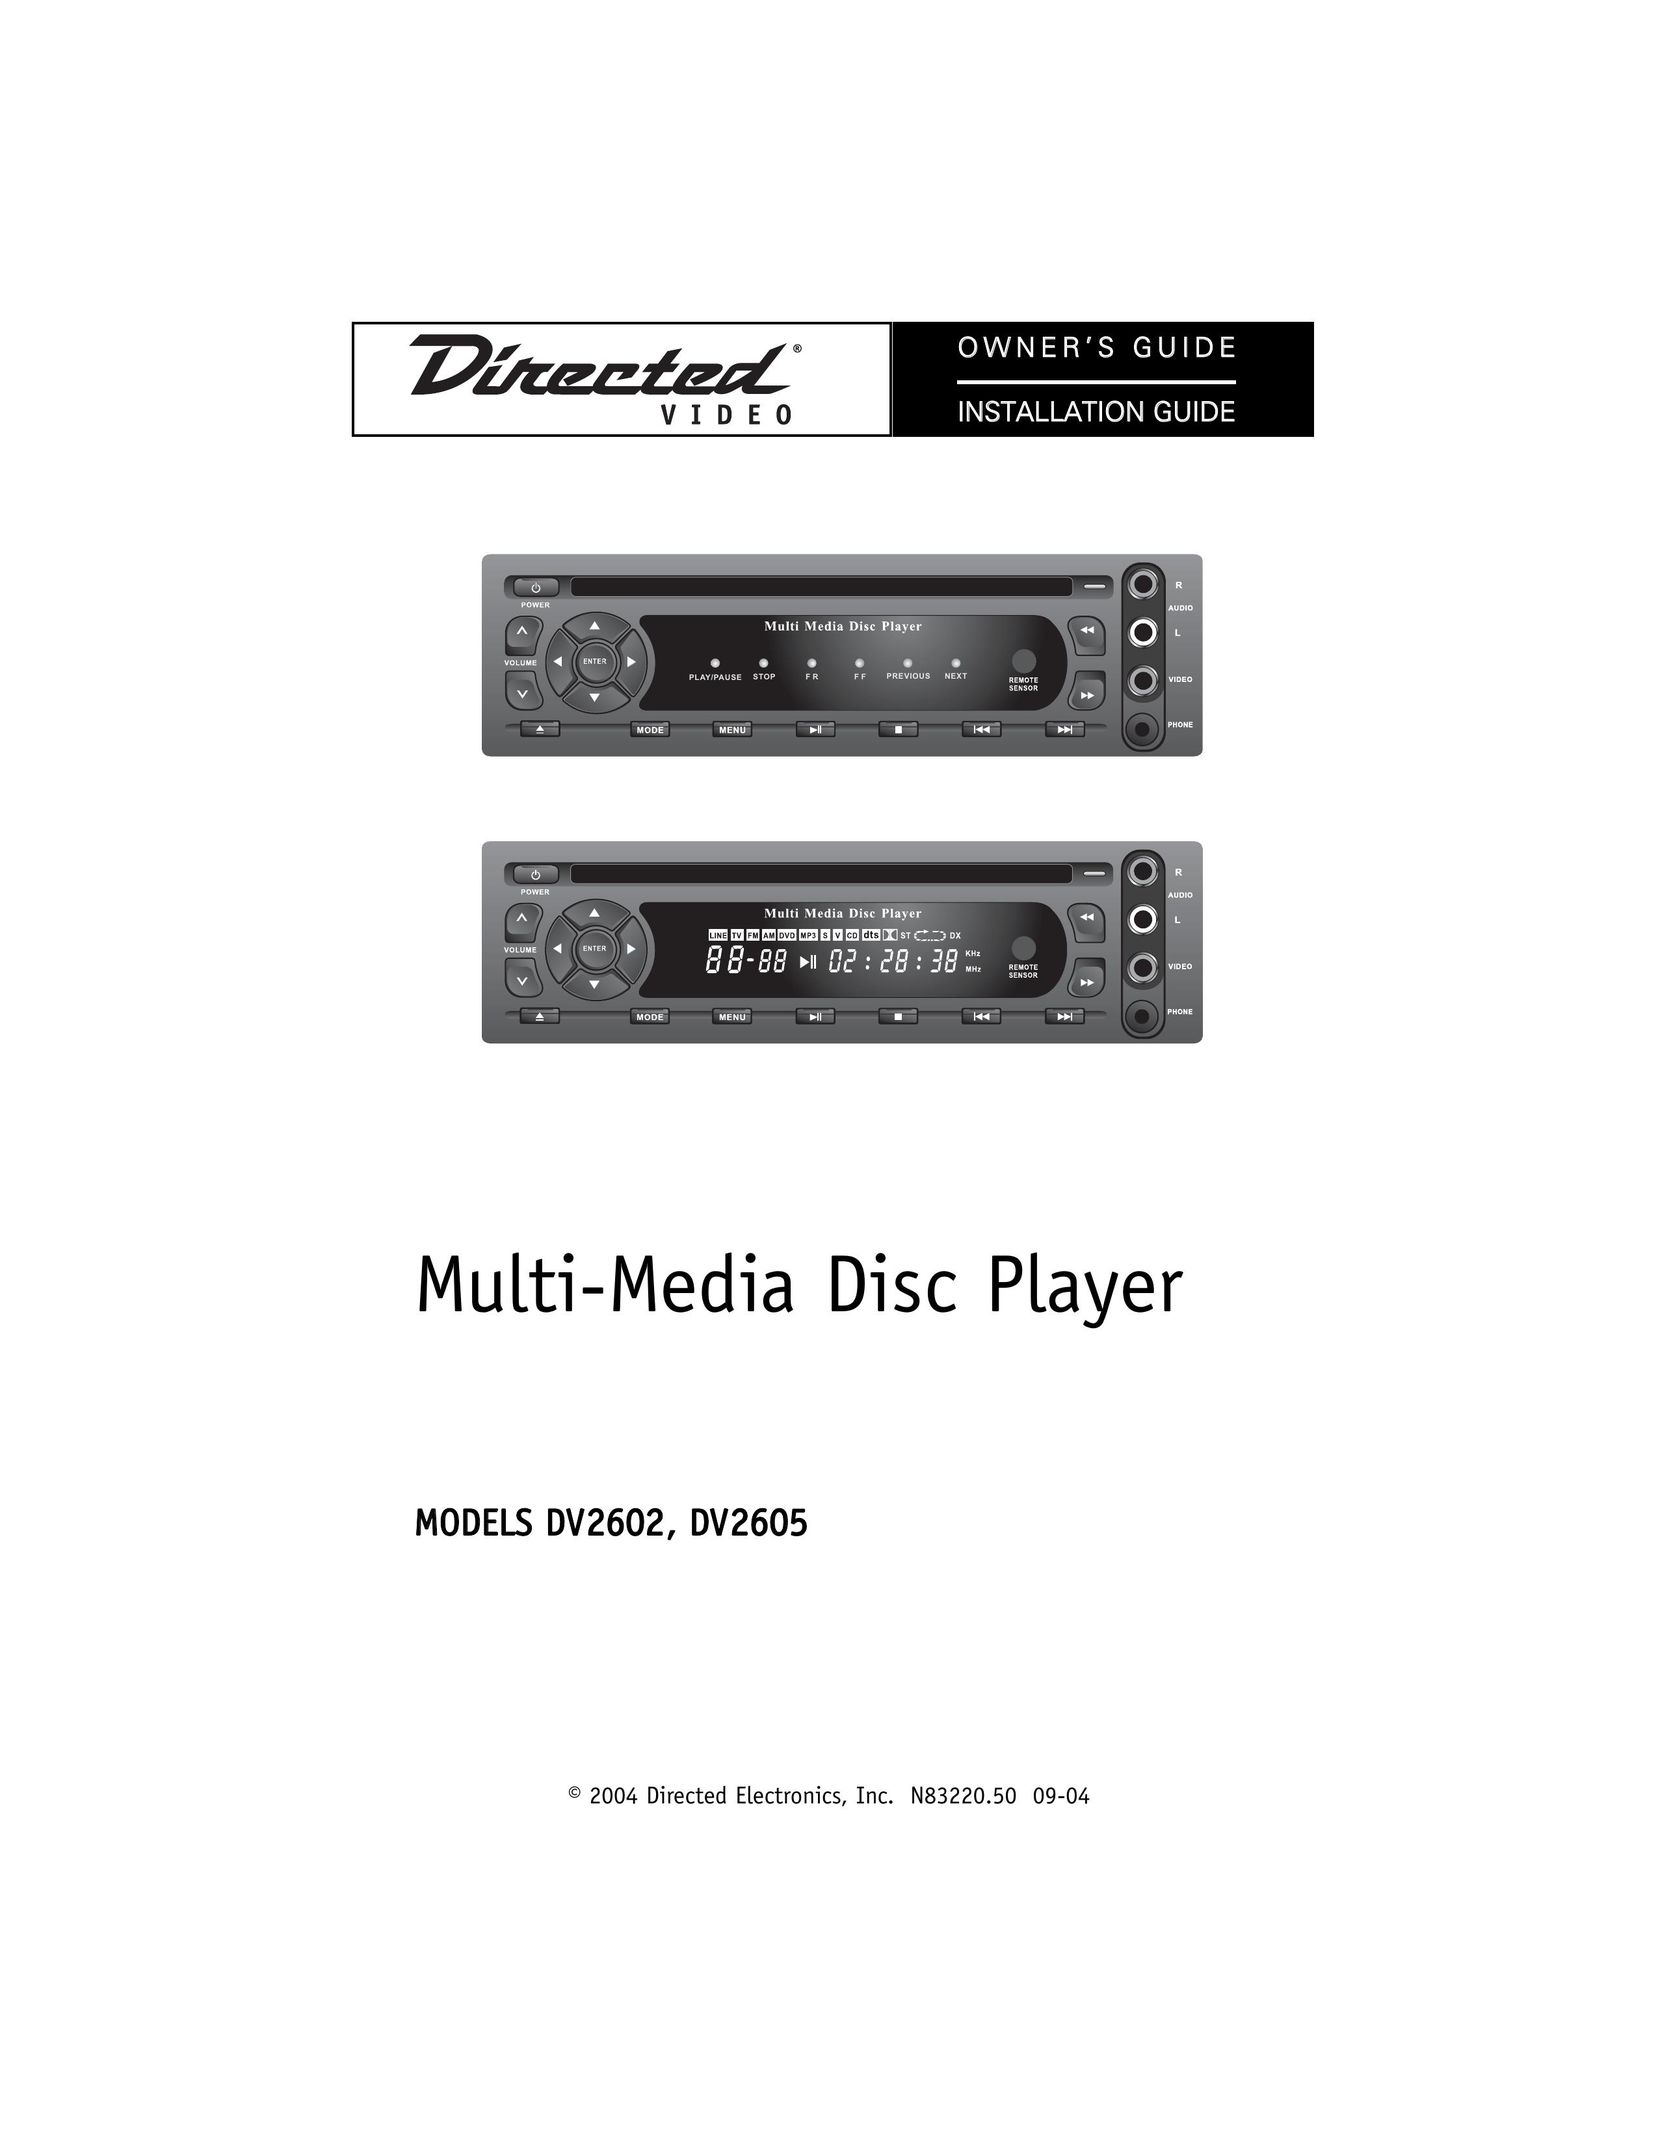 Directed Video DV2605 DVD Player User Manual